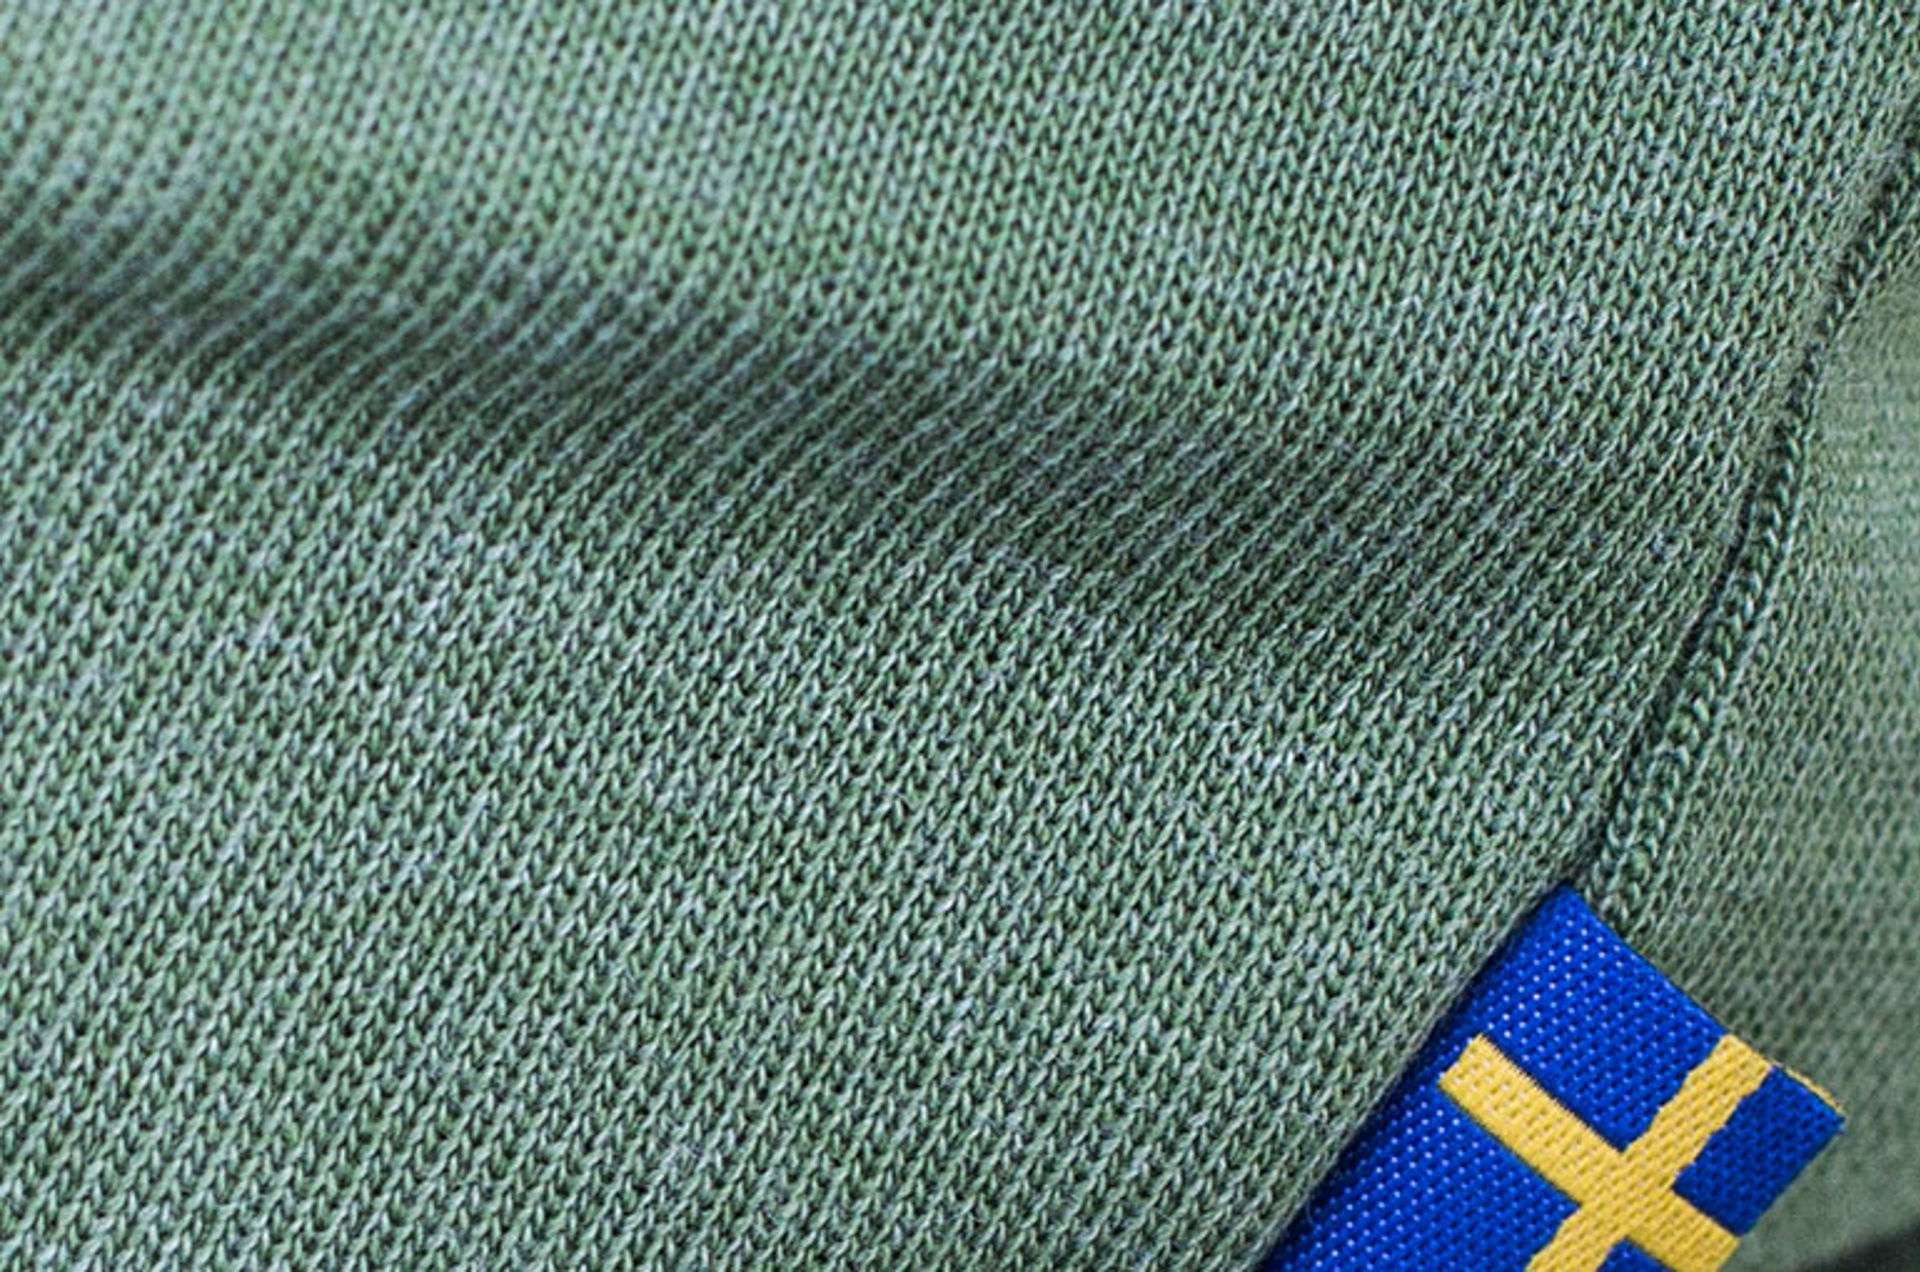 Closeup of fabric showing stitched swedish flag